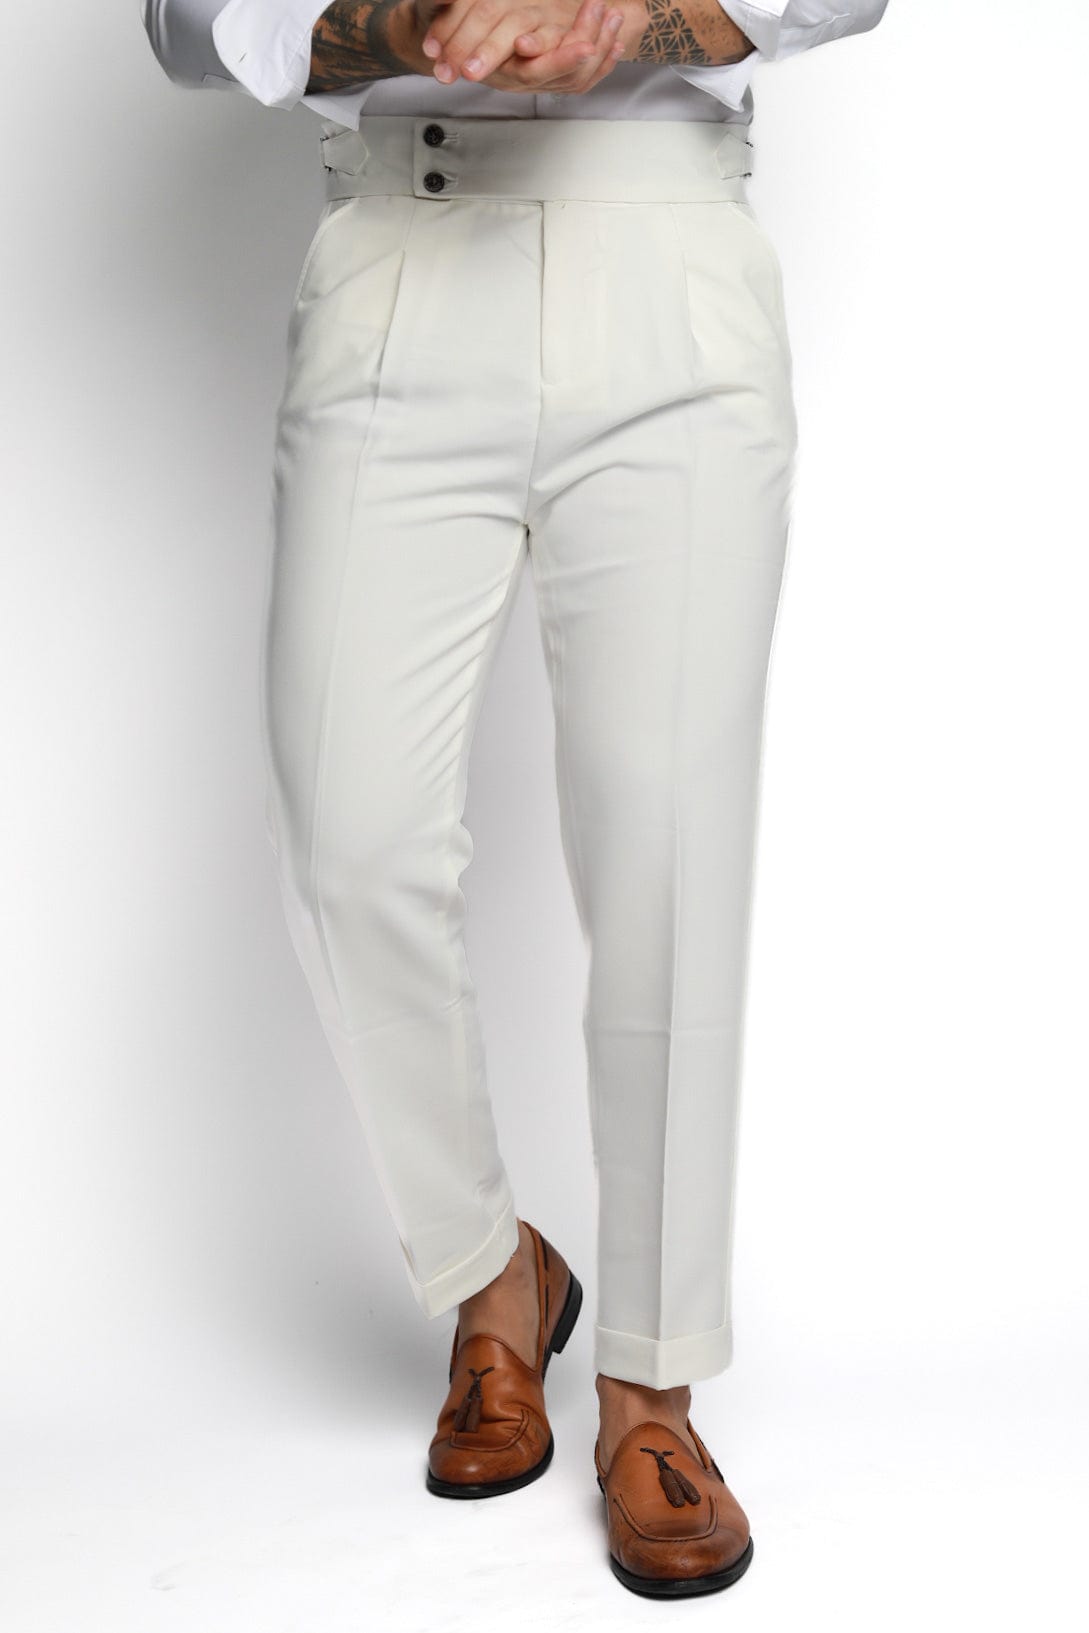 Mens White Italian Cut Dress Pant - Gerardo Collection